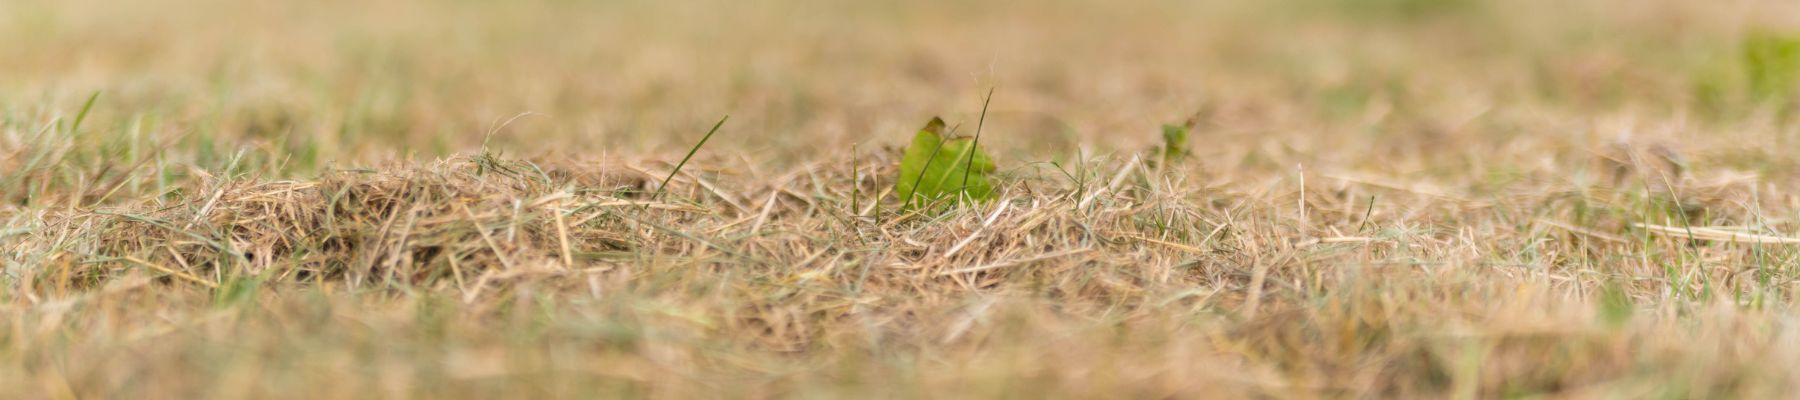 A leaf on short dry grass